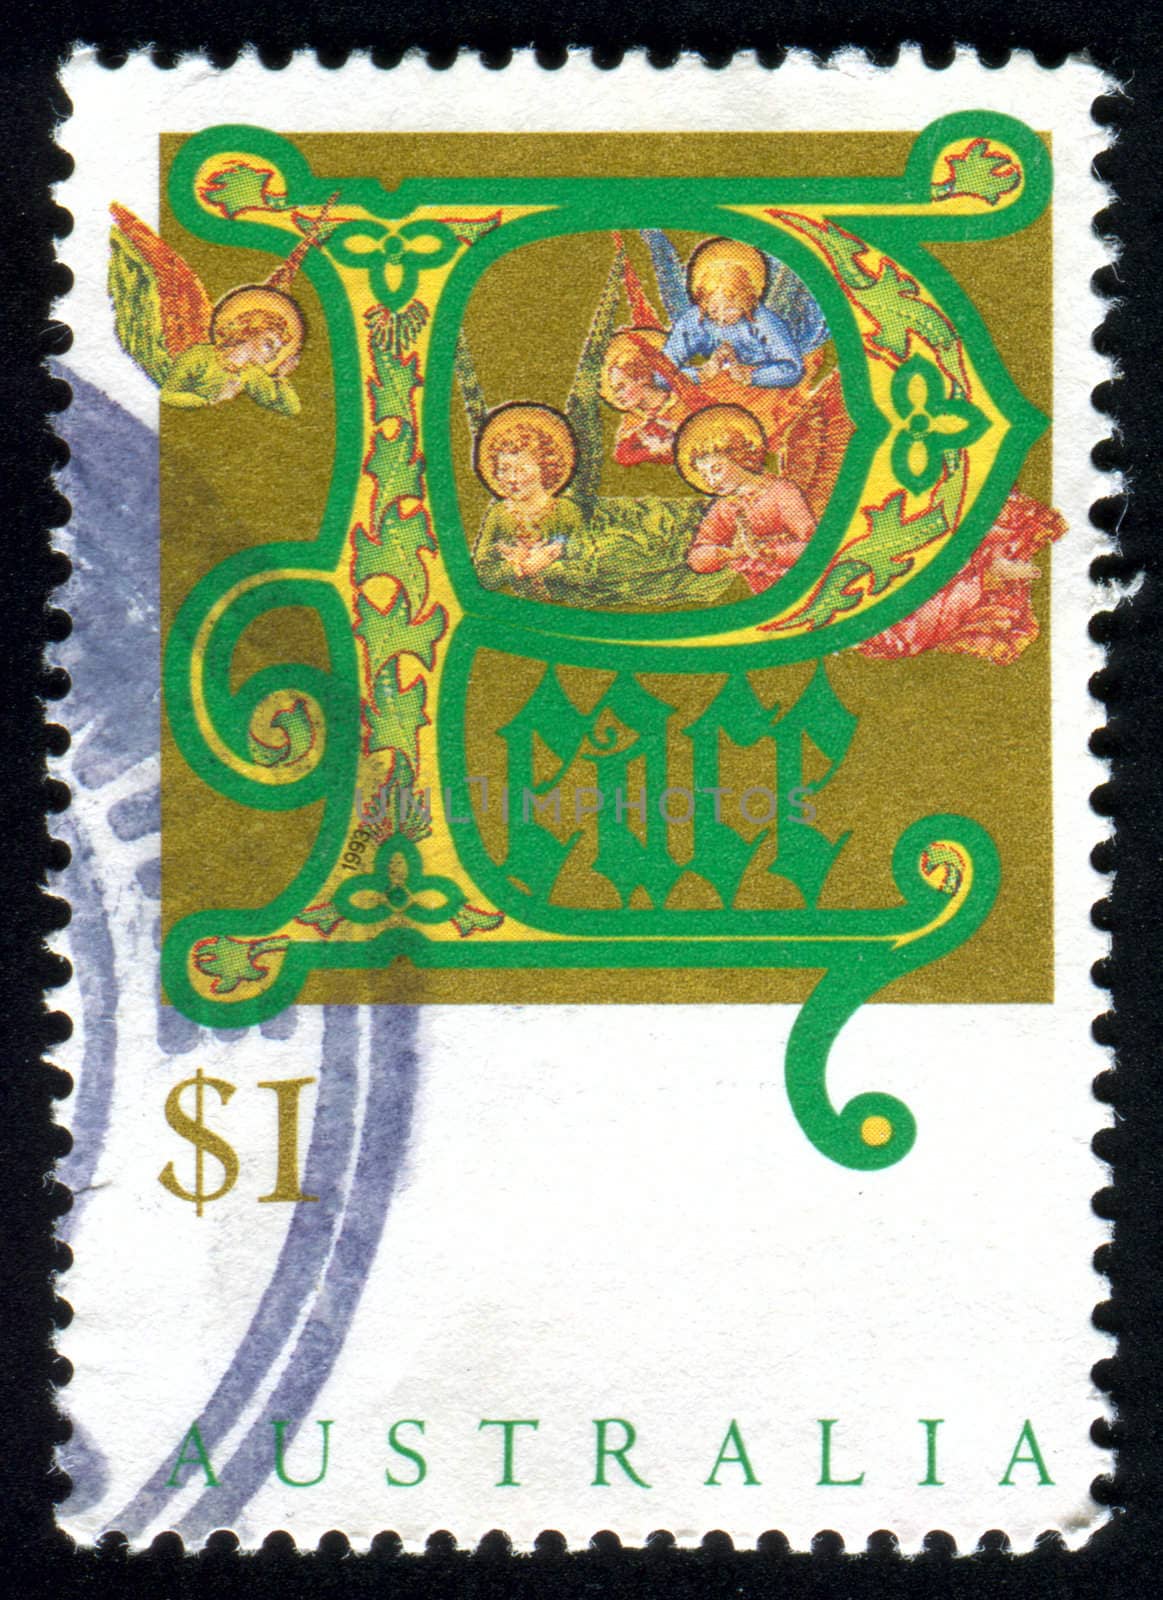 AUSTRALIA - CIRCA 1993: stamp printed by Australia, shows Christmas, circa 1993